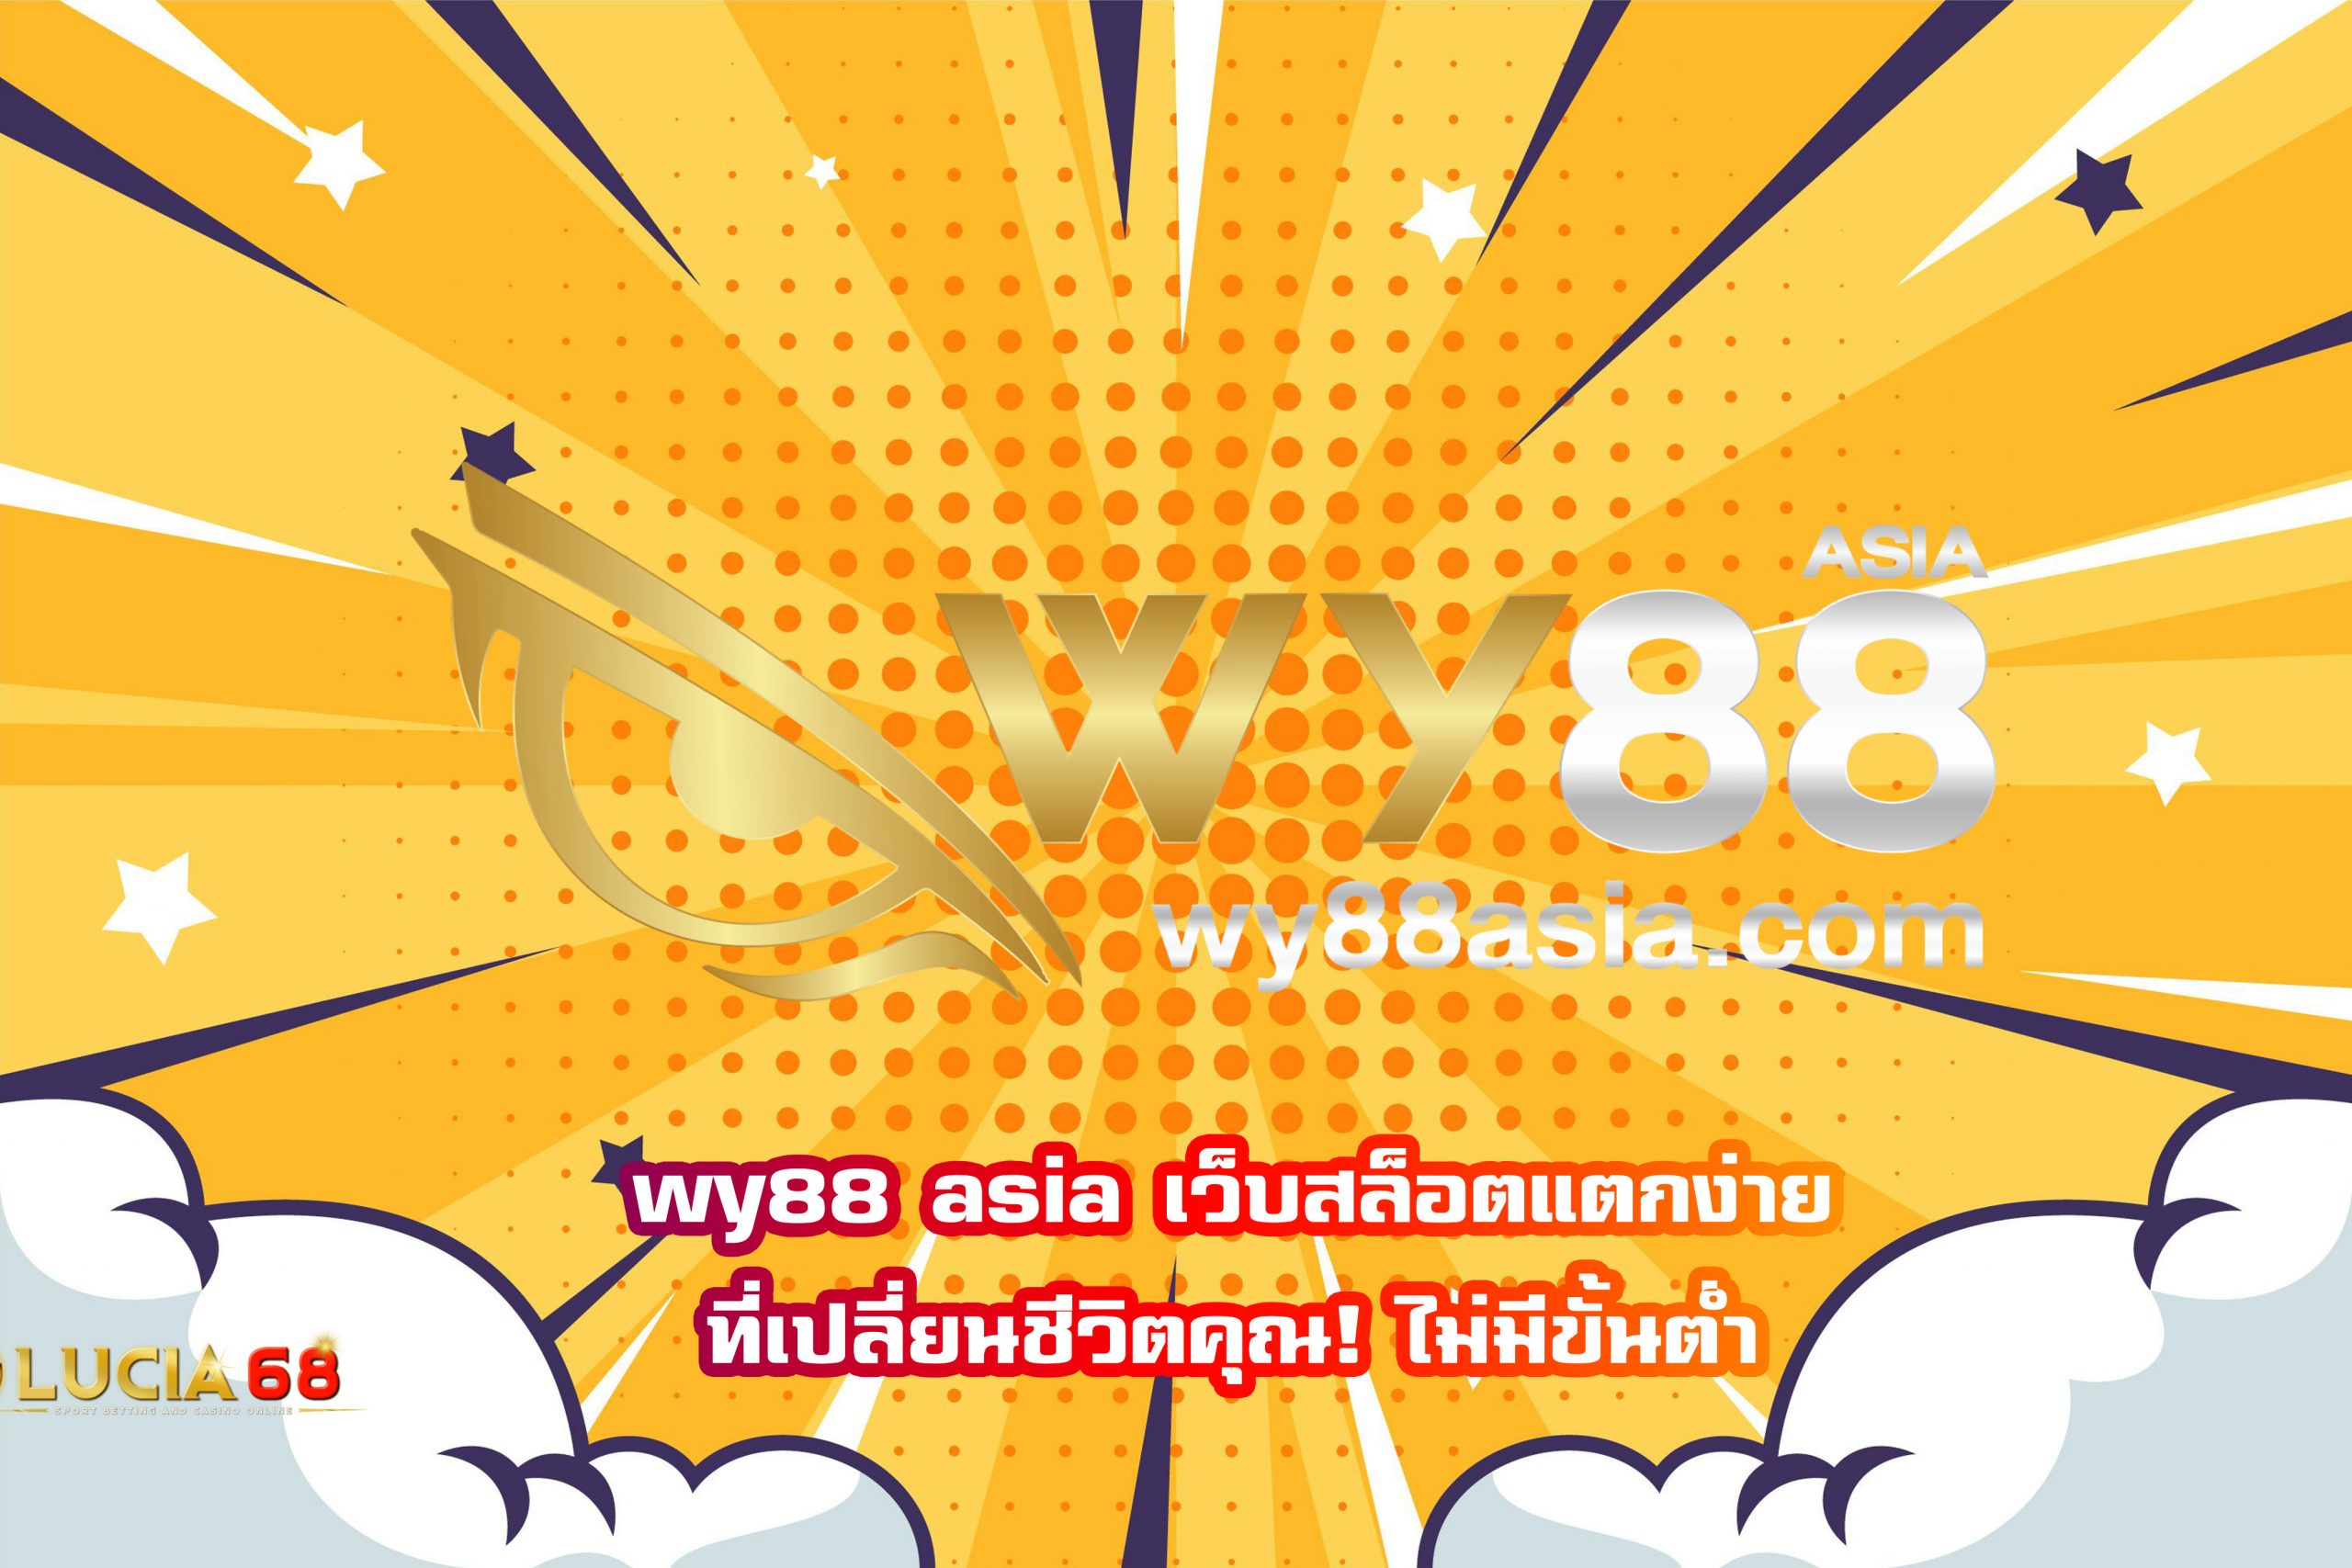 wy88 asia เว็บสล็อตแตกง่ายที่เปลี่ยนชีวิตคุณ! ไม่มีขั้นต่ำ